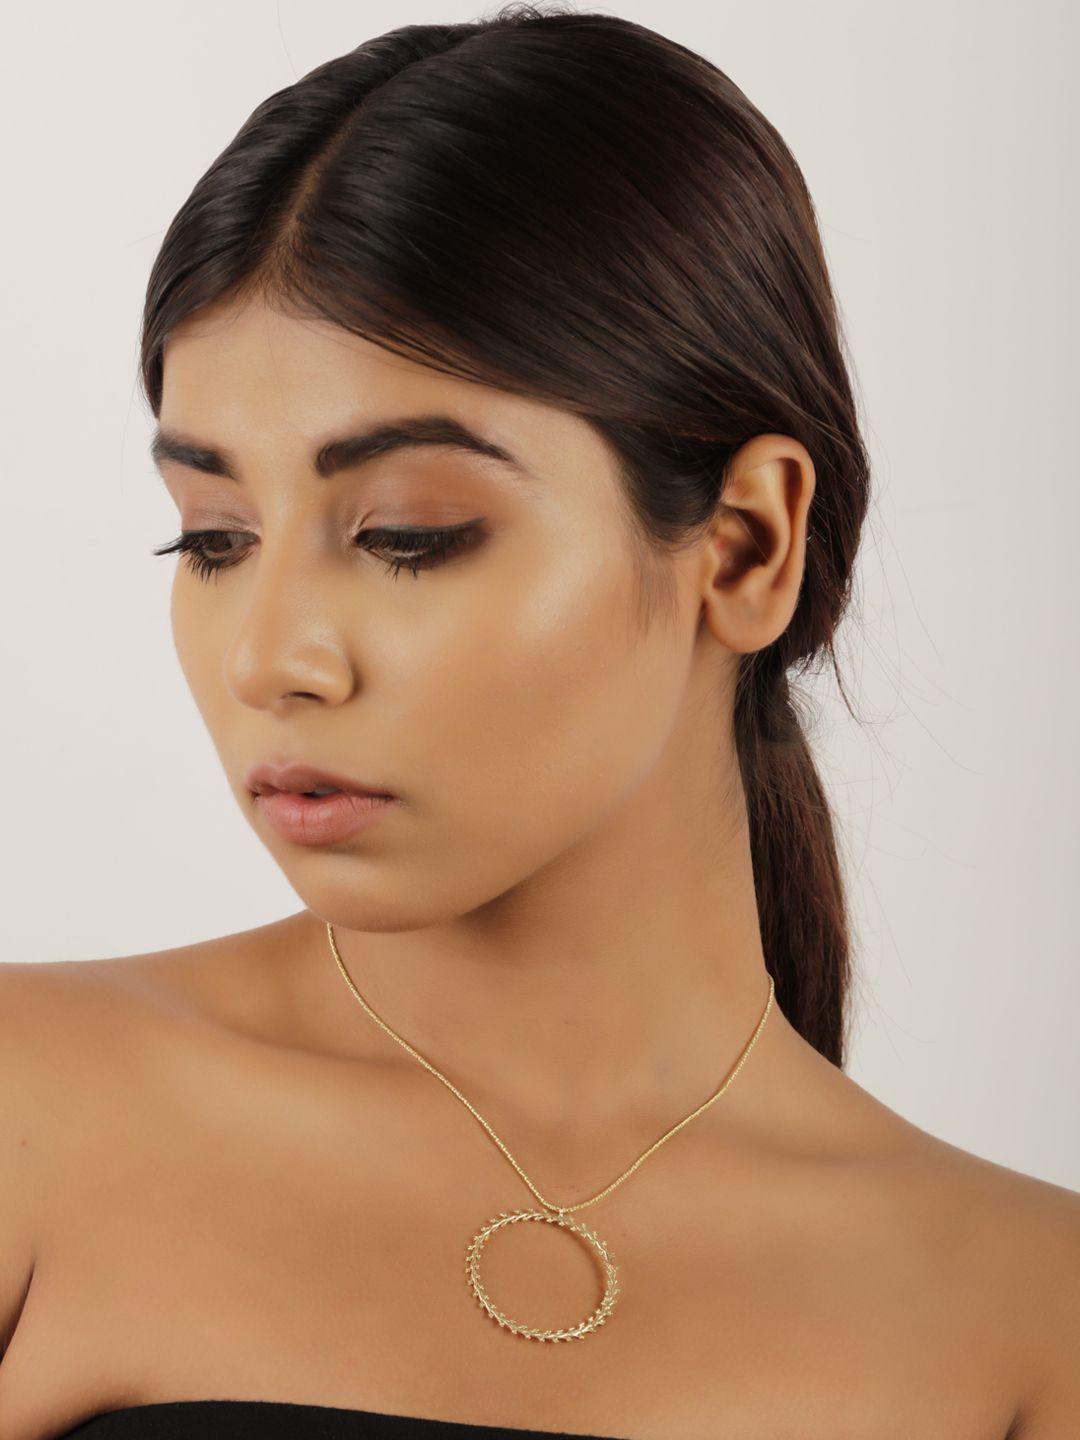 stilskii unisex gold-toned circular pendant necklace